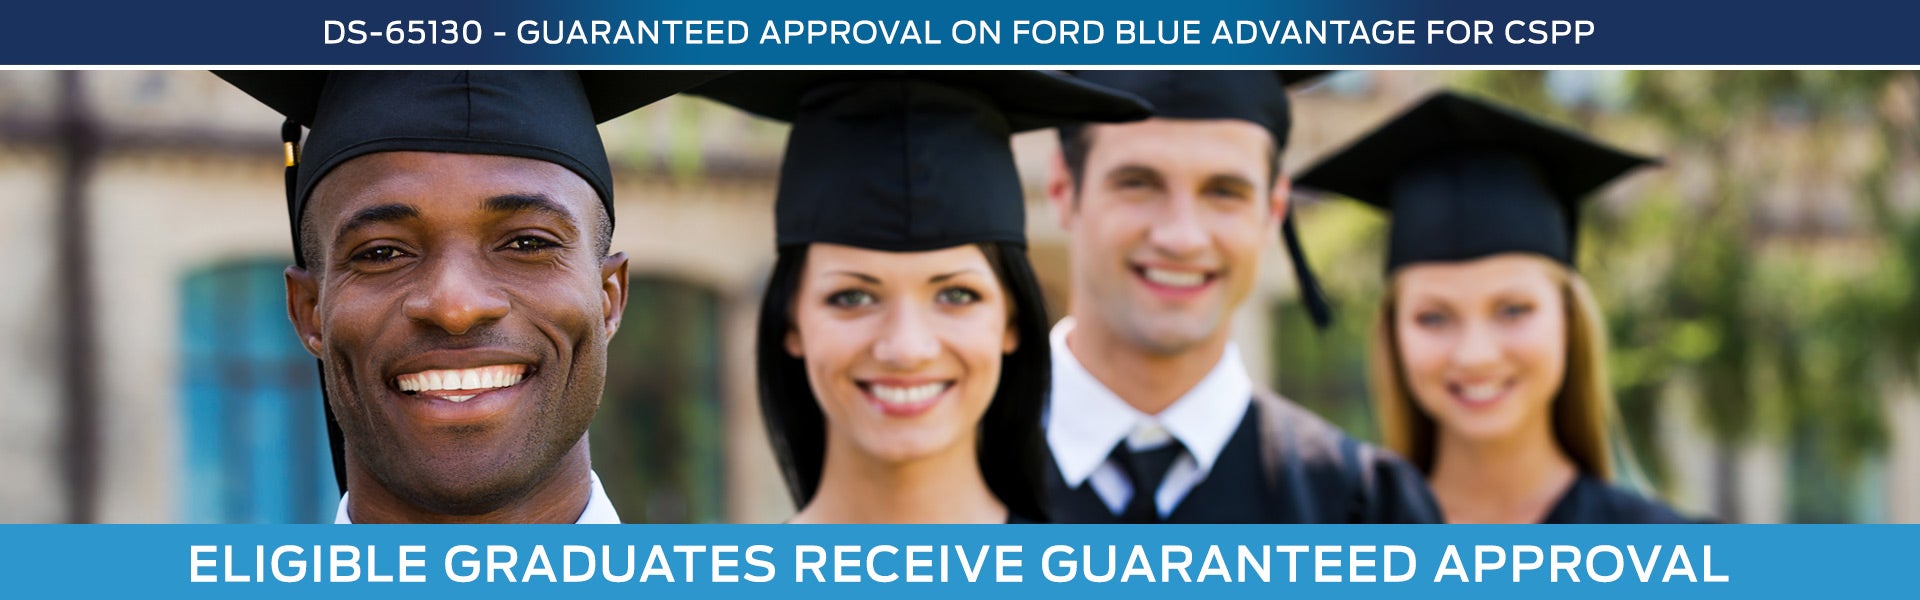 Eligiible Graduates Receive Guaranteed Approval